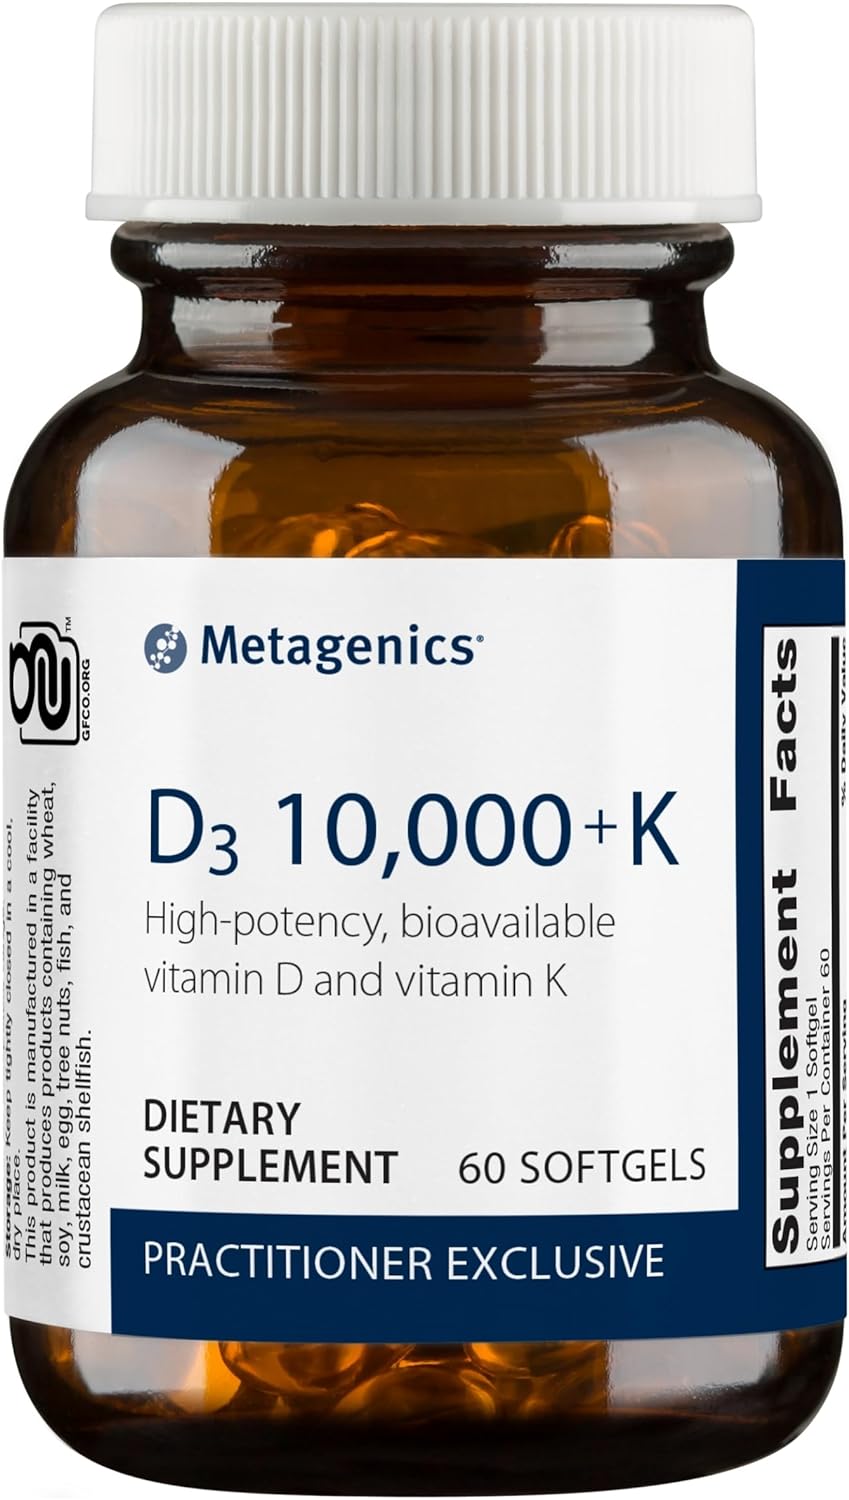 Metagenics-D3-10000-+-K---for-3169